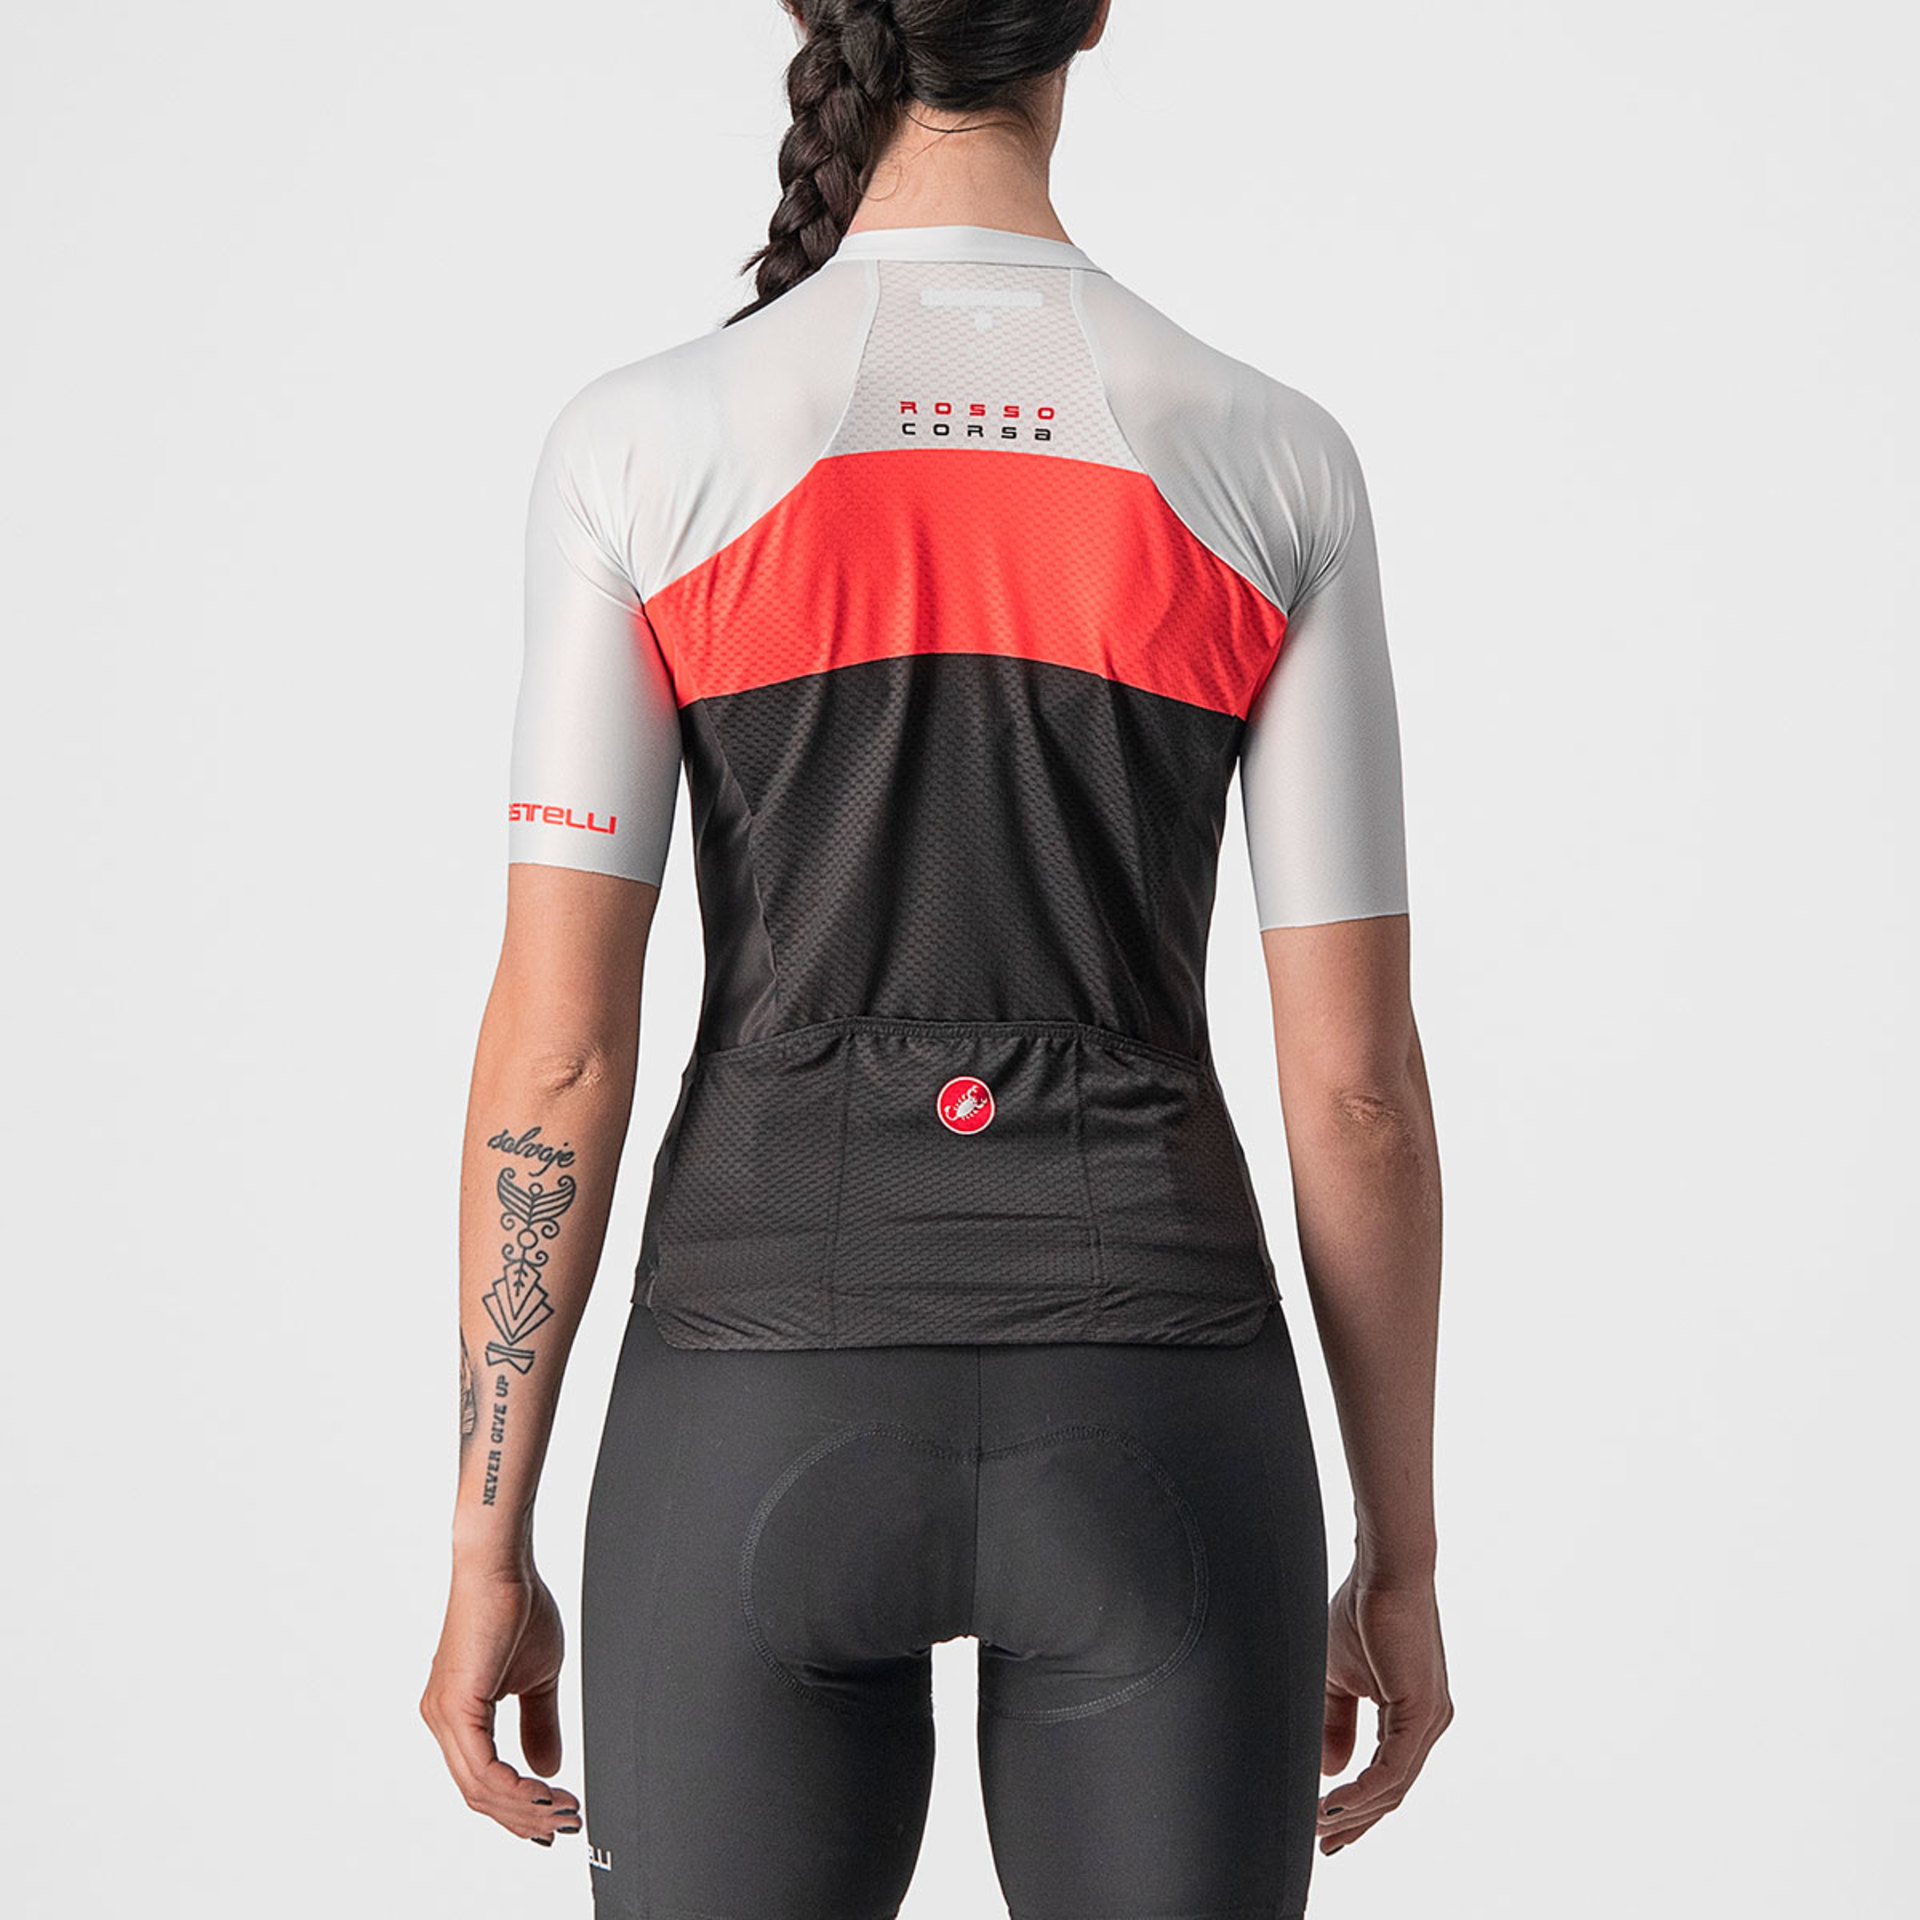 Castelli Aero Pro Fietsshirt Kort Zwart/Roze/Wit Dames